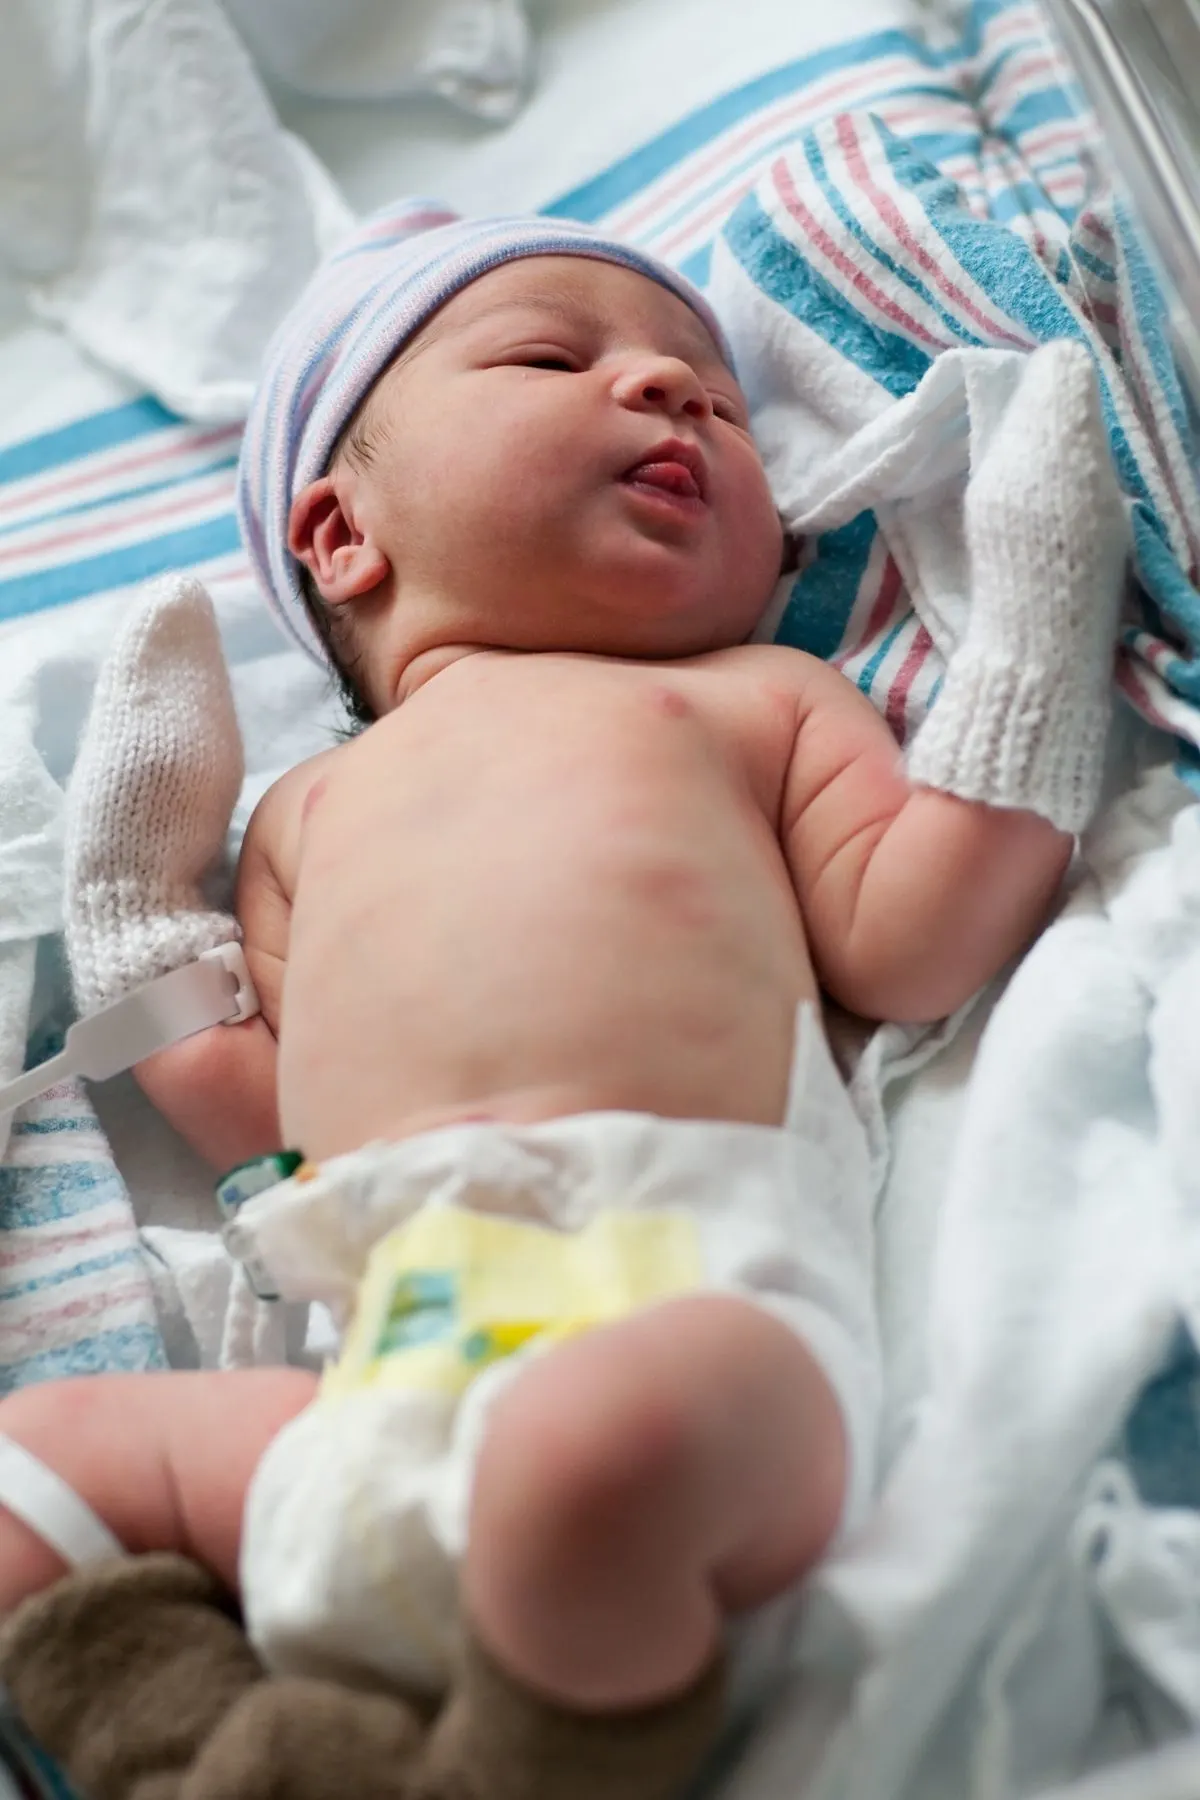 https://themomfriend.com/wp-content/uploads/2021/08/newborn-baby-in-hospital-bassinet.jpg.webp